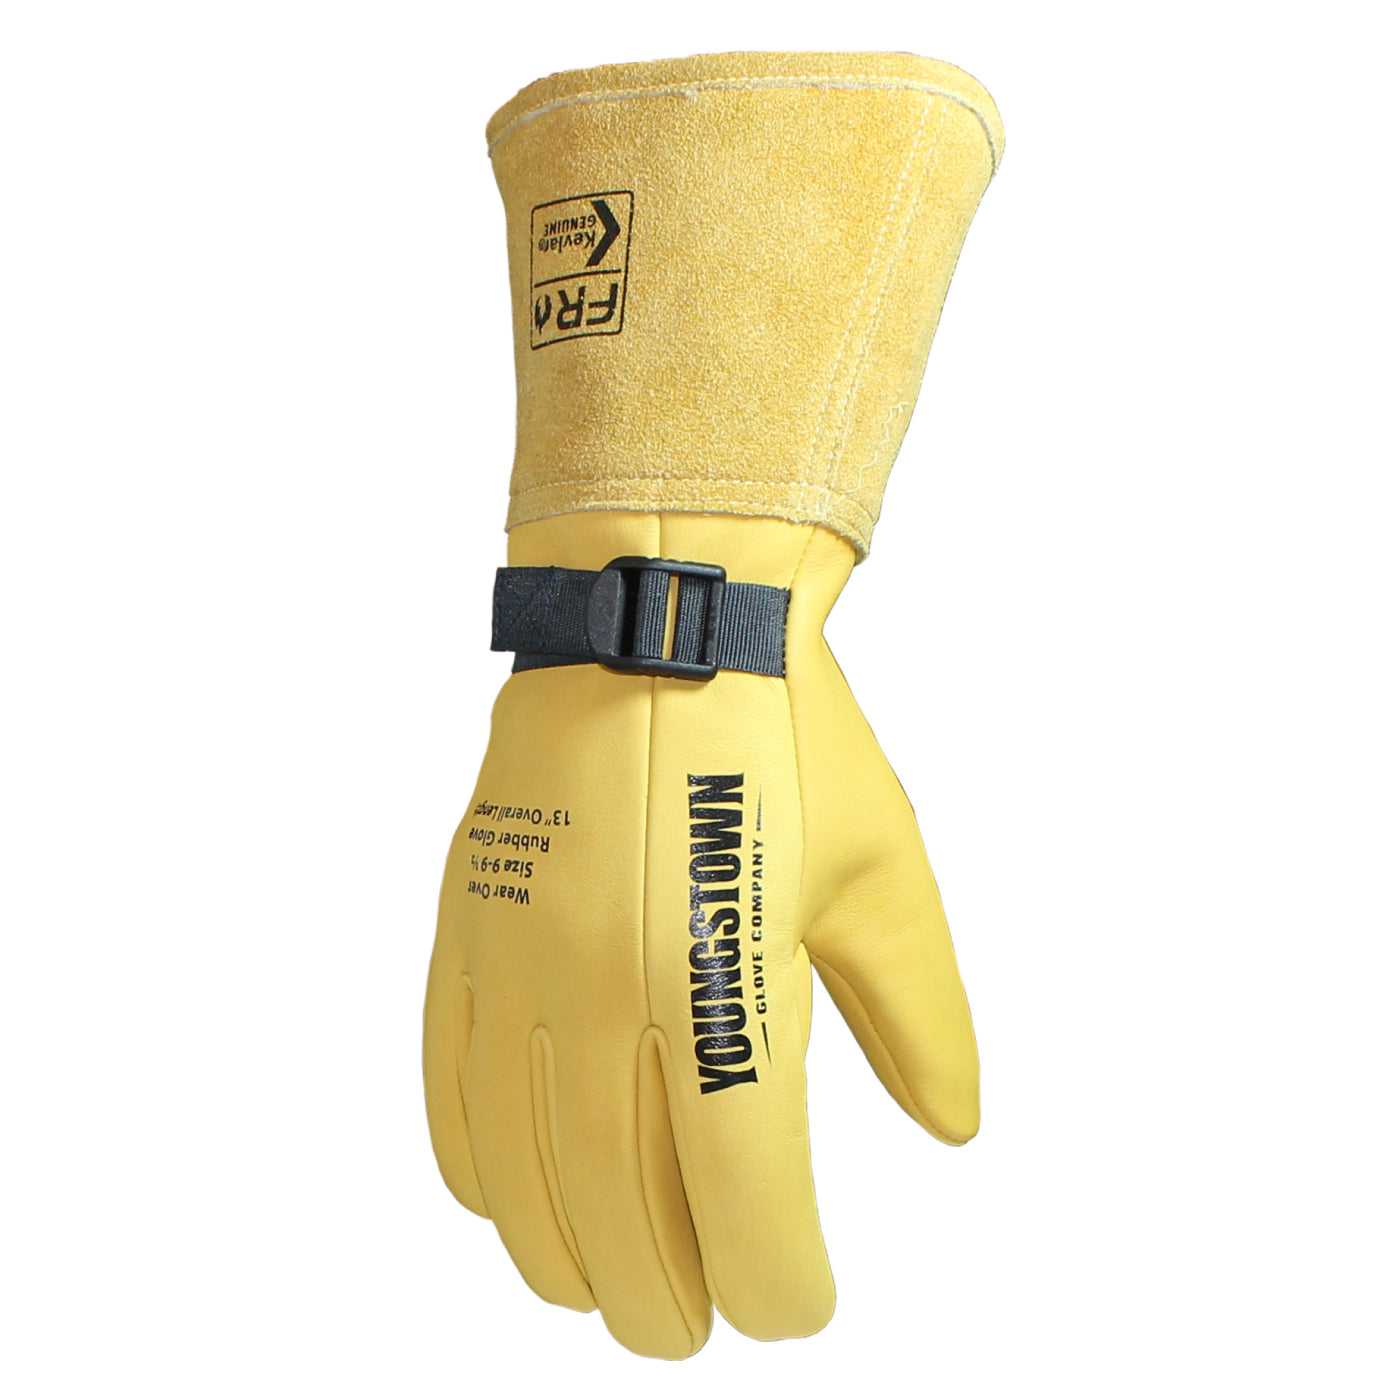 A3 Cut Resistant XTRA Grip Gloves - Walker's